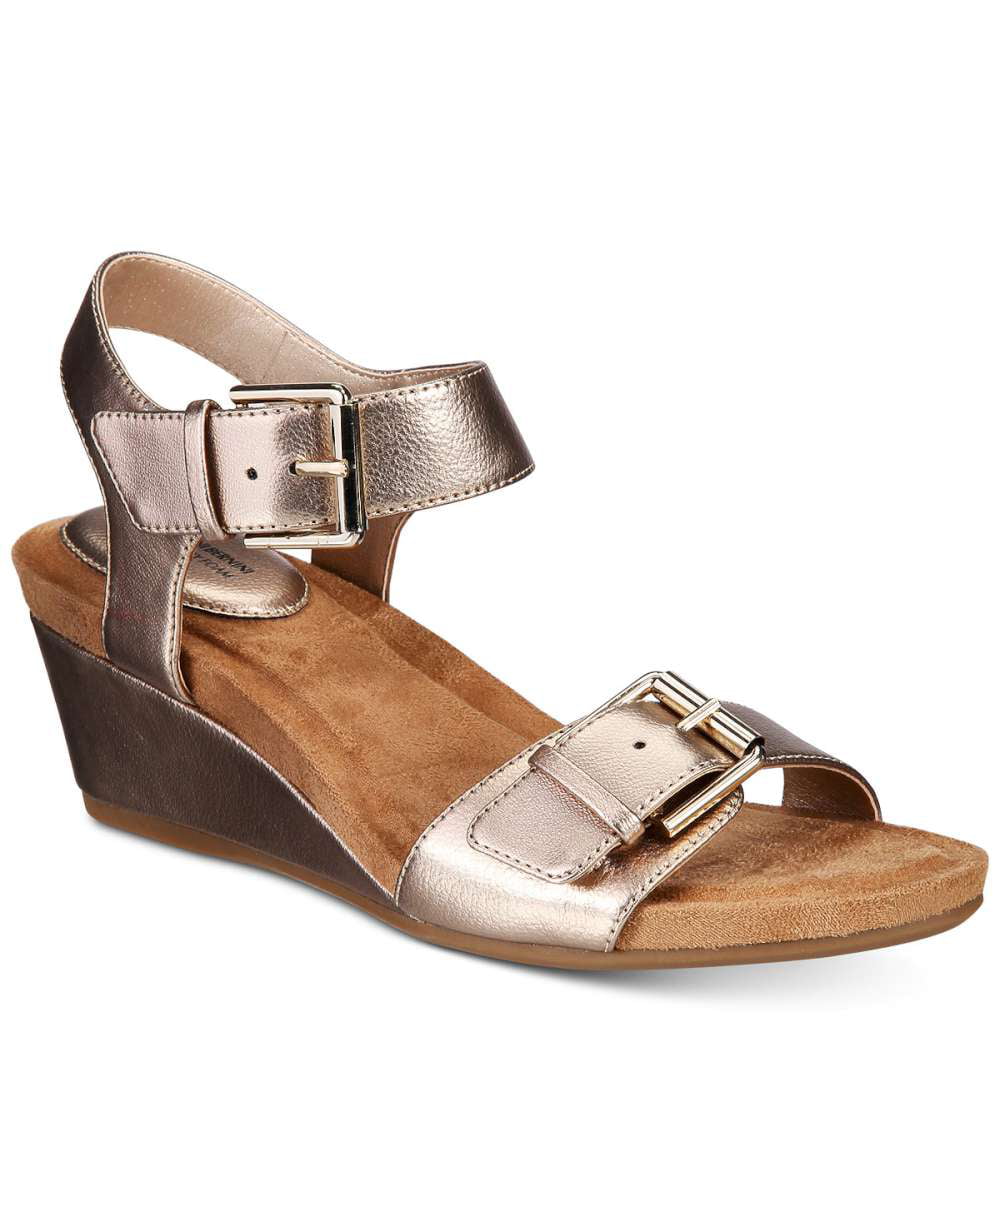 Giani Bernini Womens Bryana Open Toe Casual Platform Sandals - Walmart.com